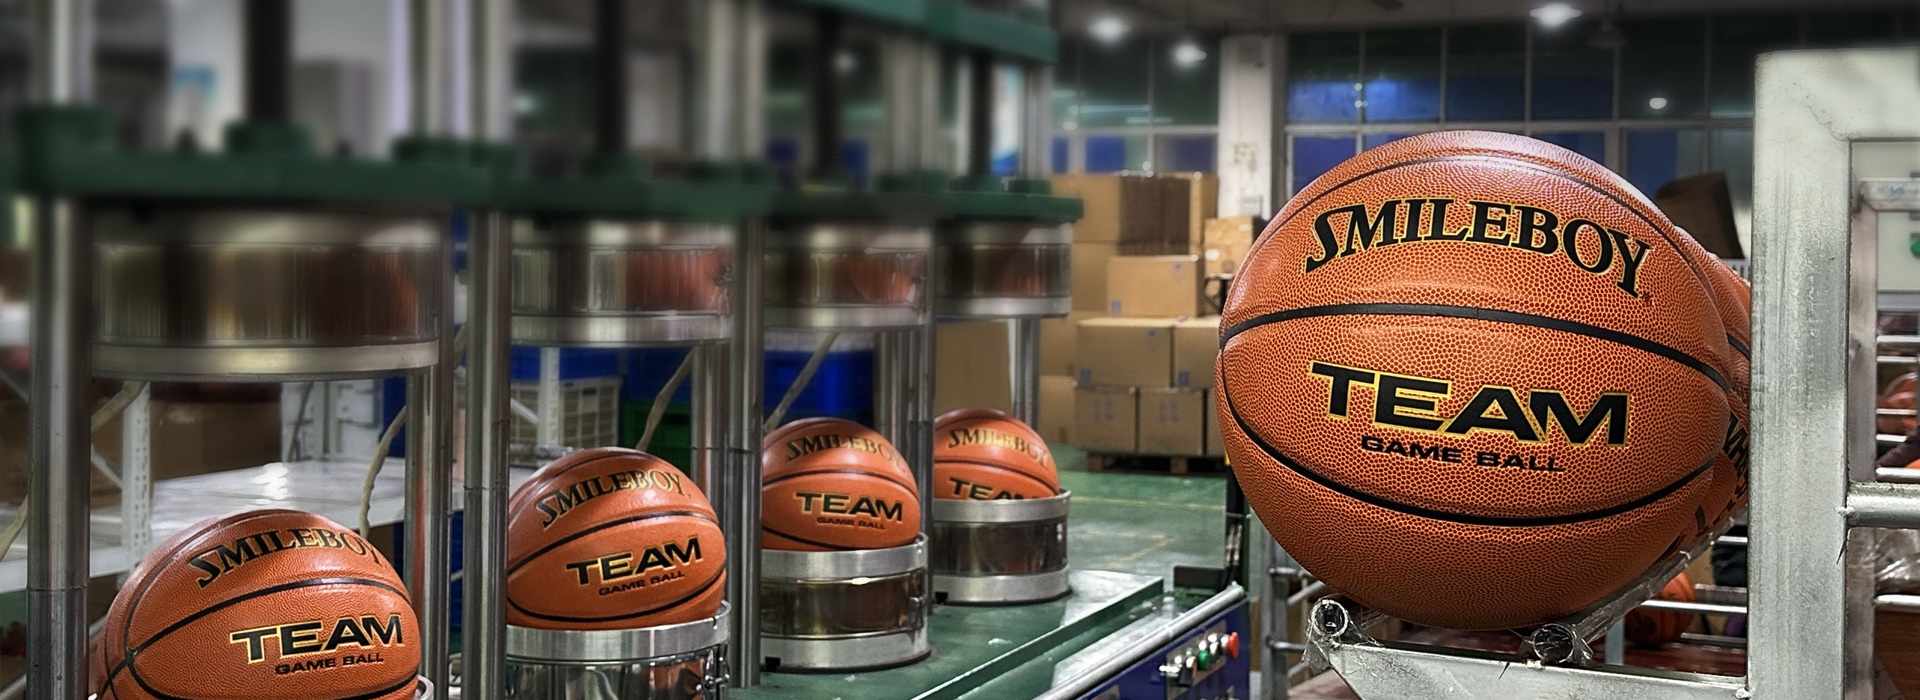 wholesale basketball